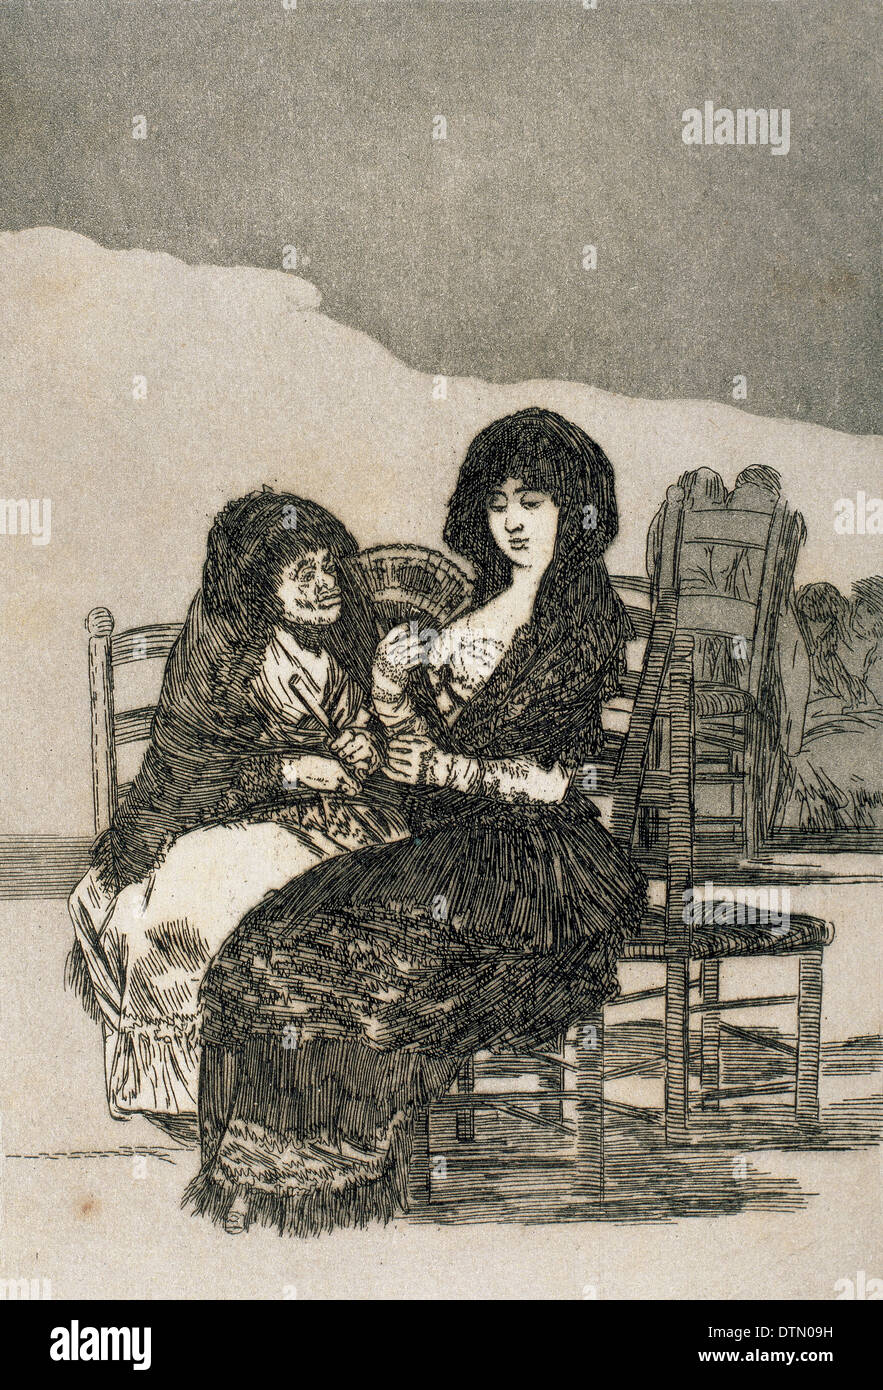 Francisco de Goya (1746-1828). Spanischer Maler und Grafiker. Los Caprichos. "Bellos Consejos" (guter Rat). Aquatinta. Stockfoto